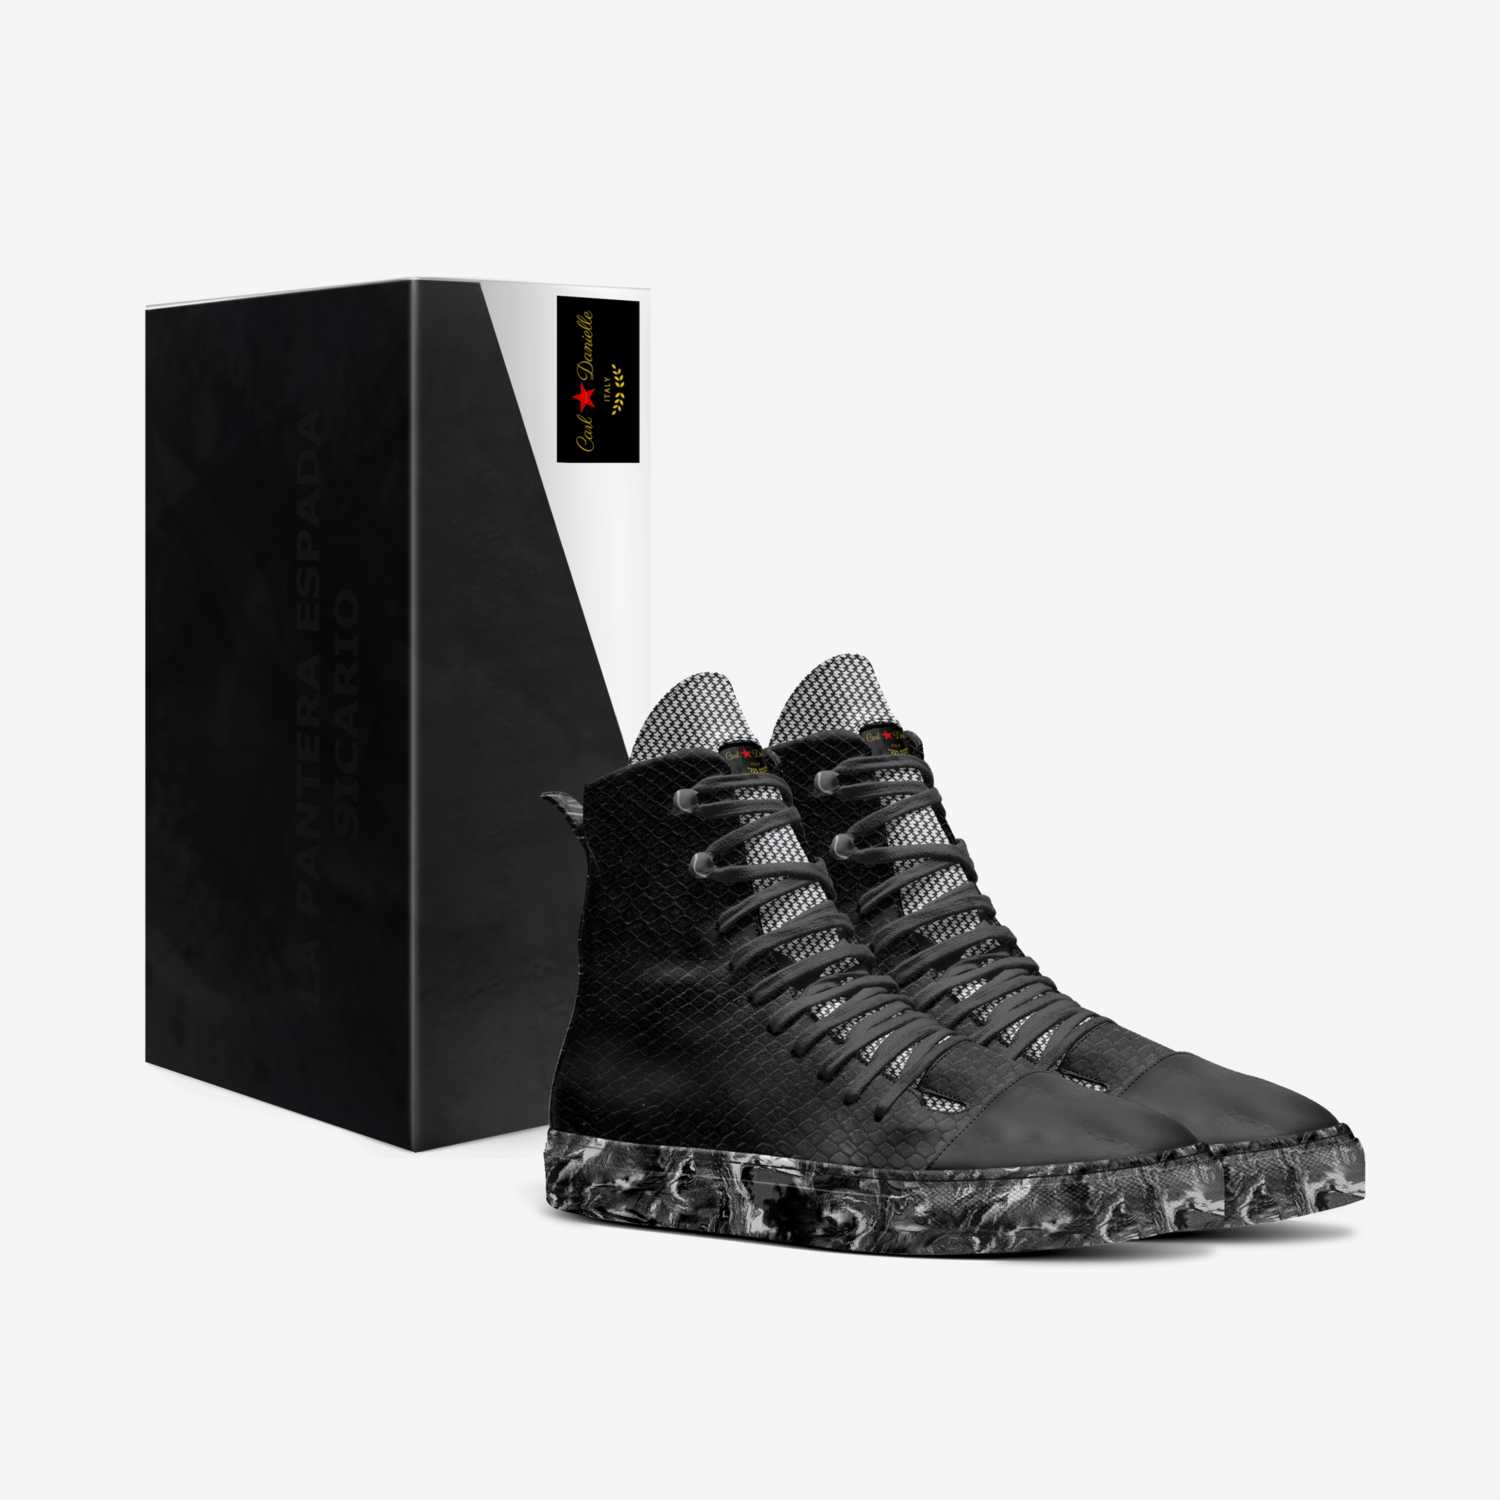 CARL DANIELLE custom made in Italy shoes by Carl Danielle | Box view